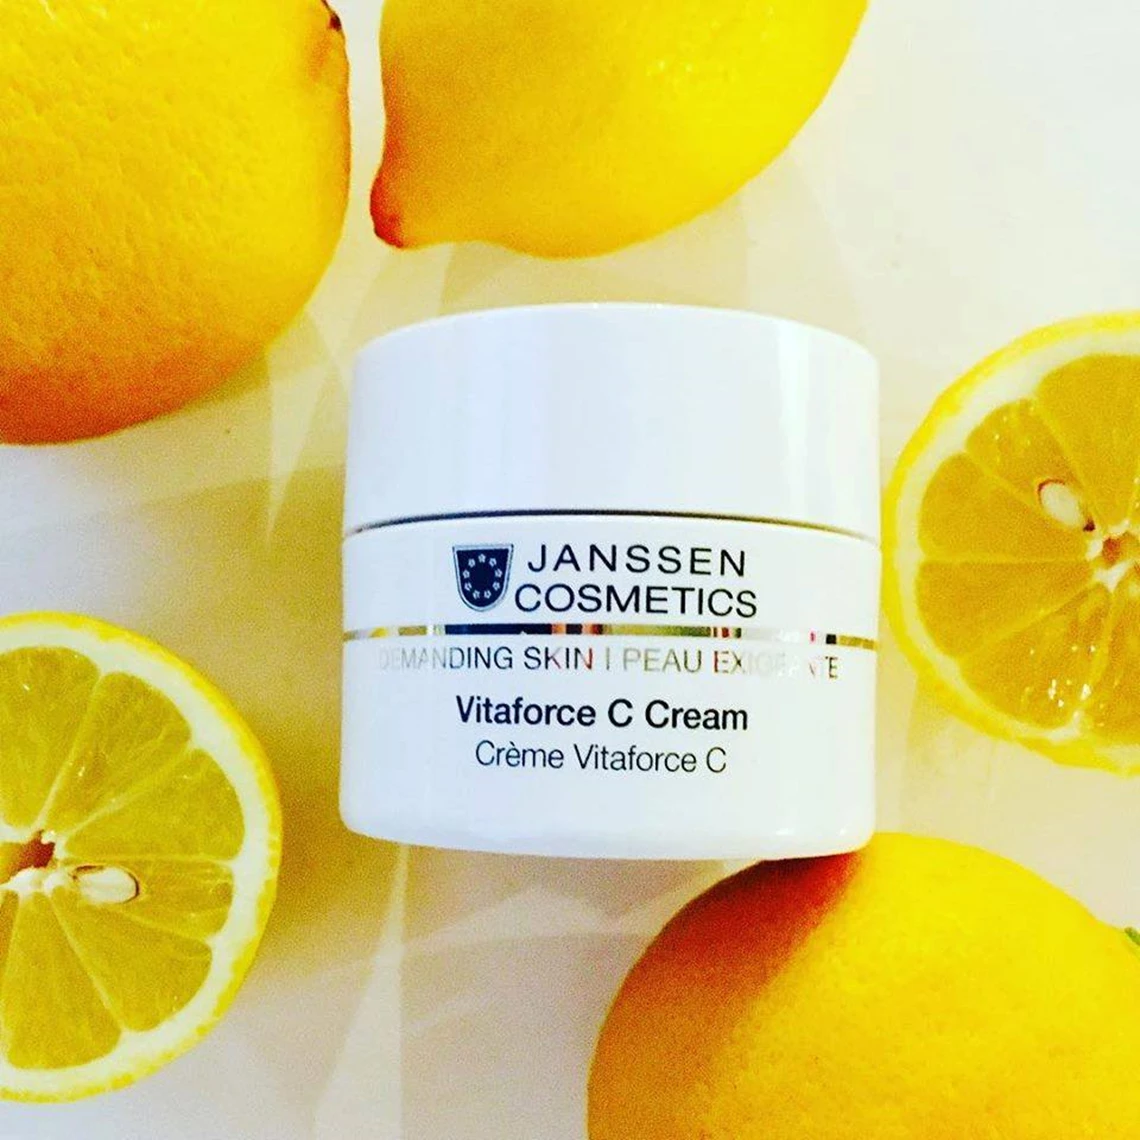 Vitaforce C Cream by Janssen Cosmetics